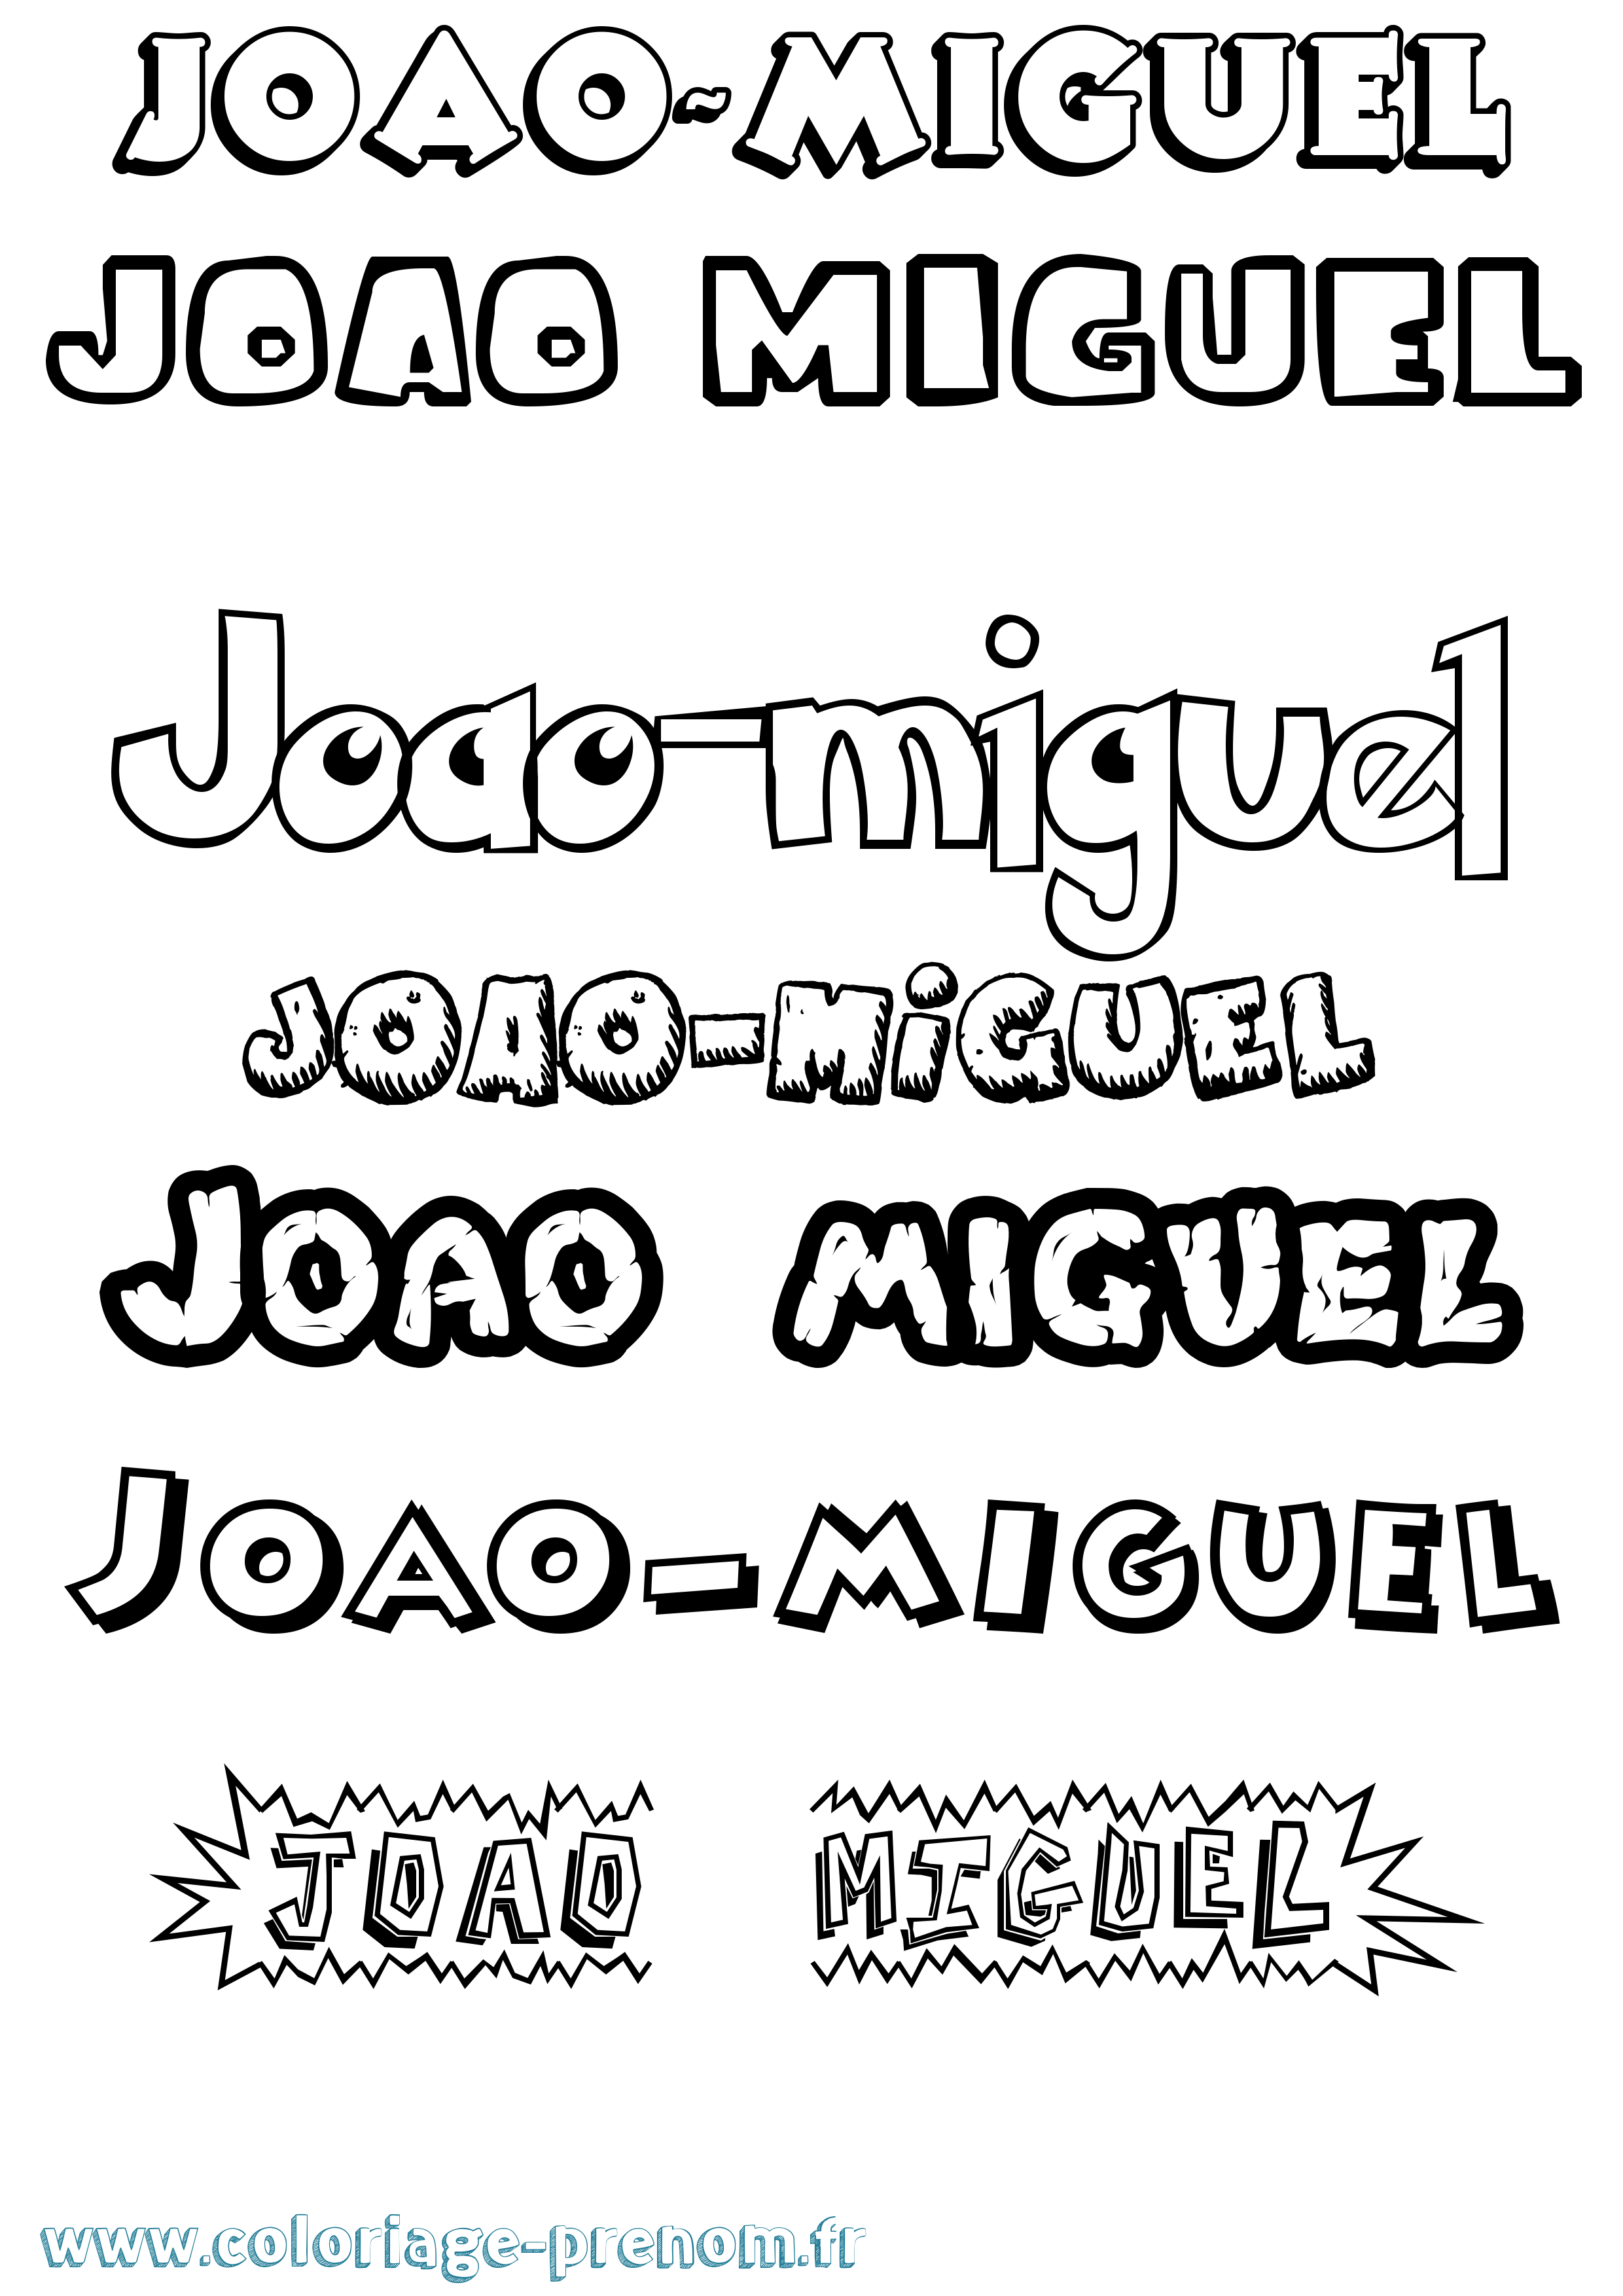 Coloriage prénom Joao-Miguel Dessin Animé